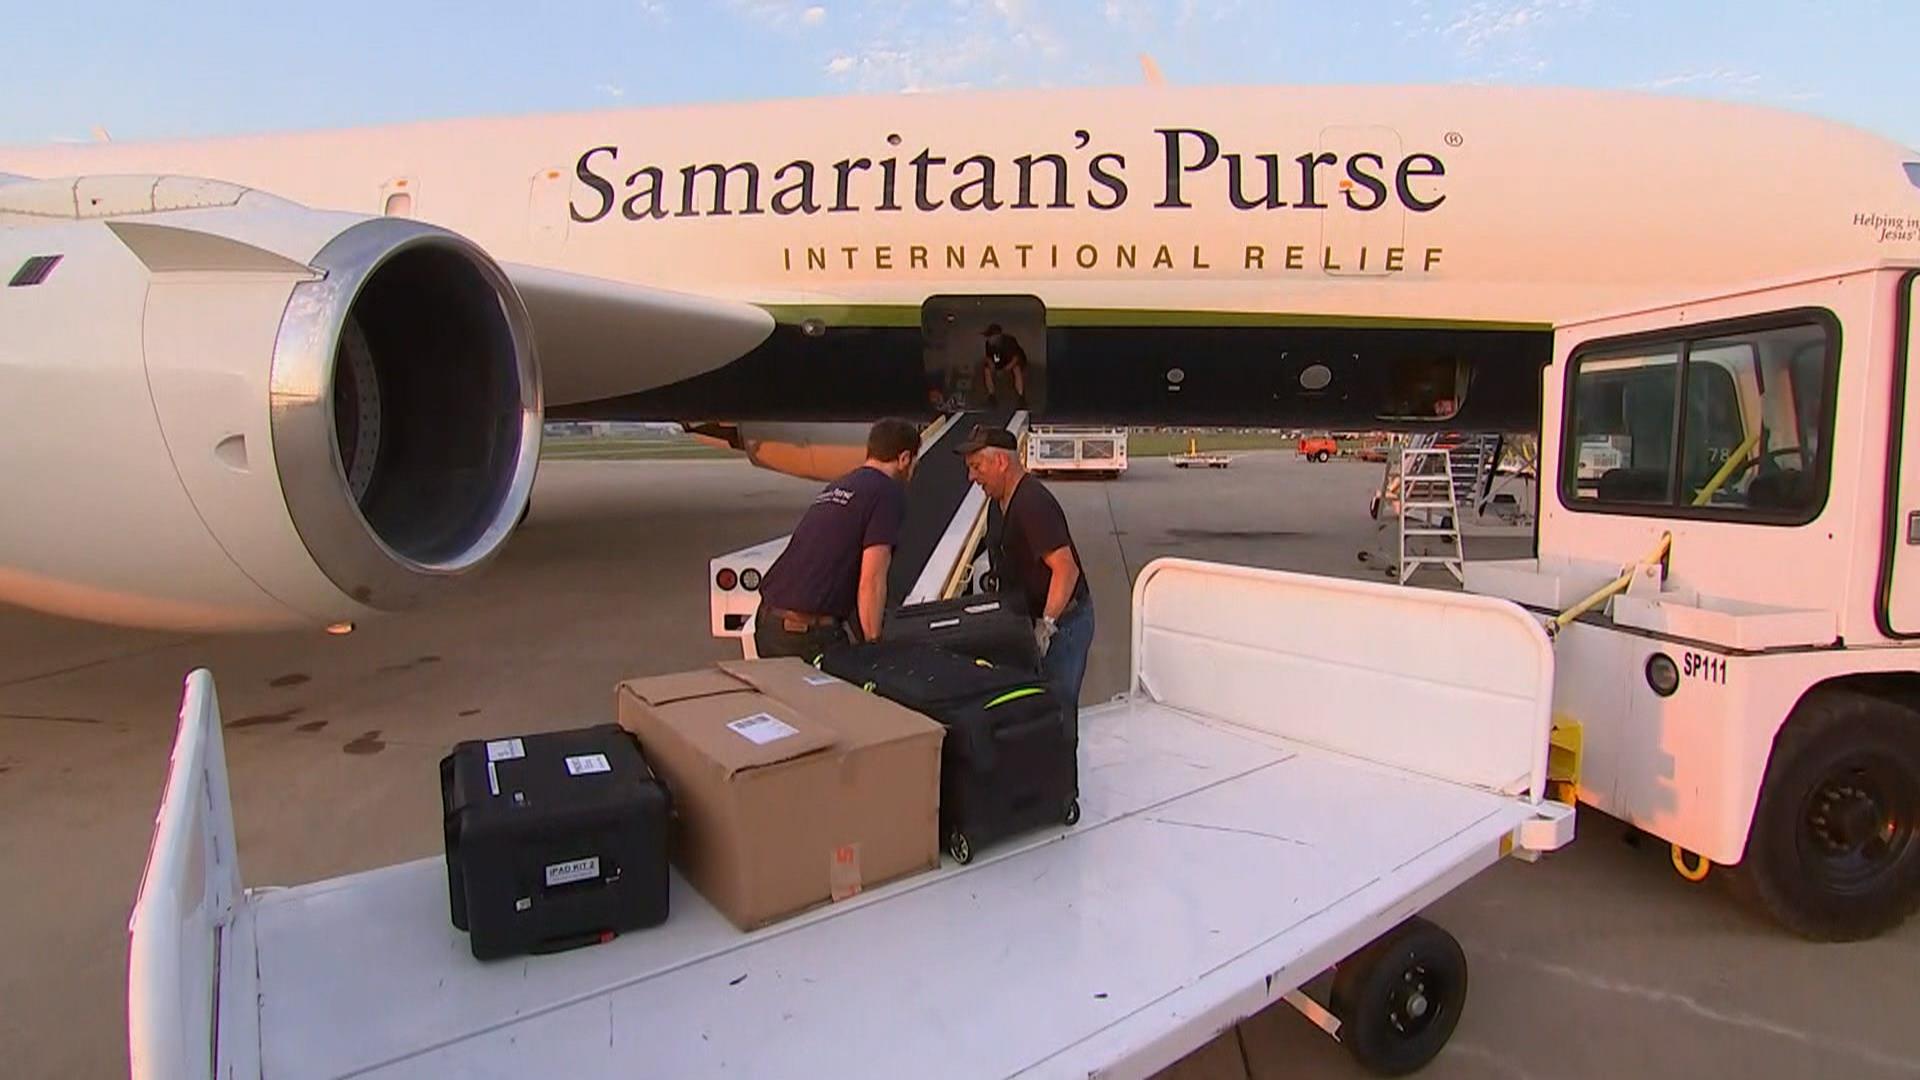 Samaritan's Purse International Relief